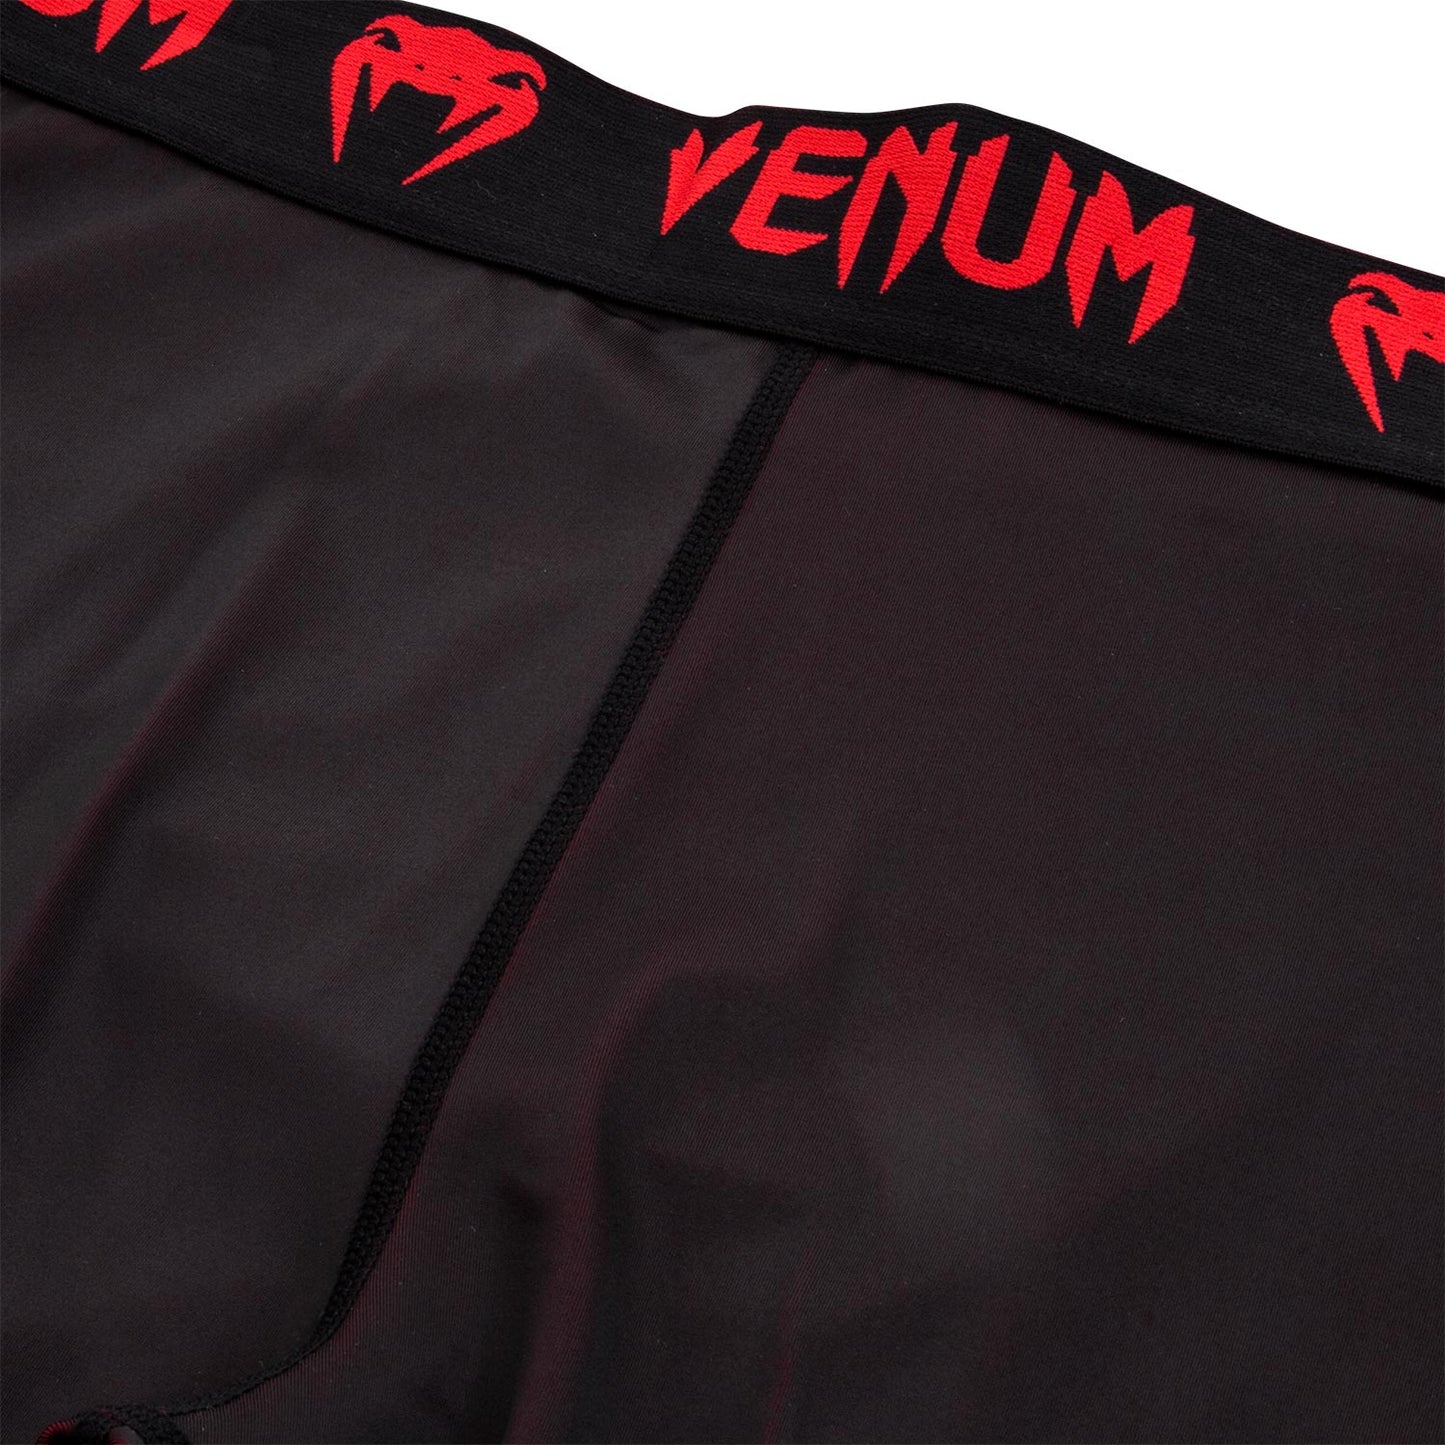 Venum Giant Compression Tights - Black/Red